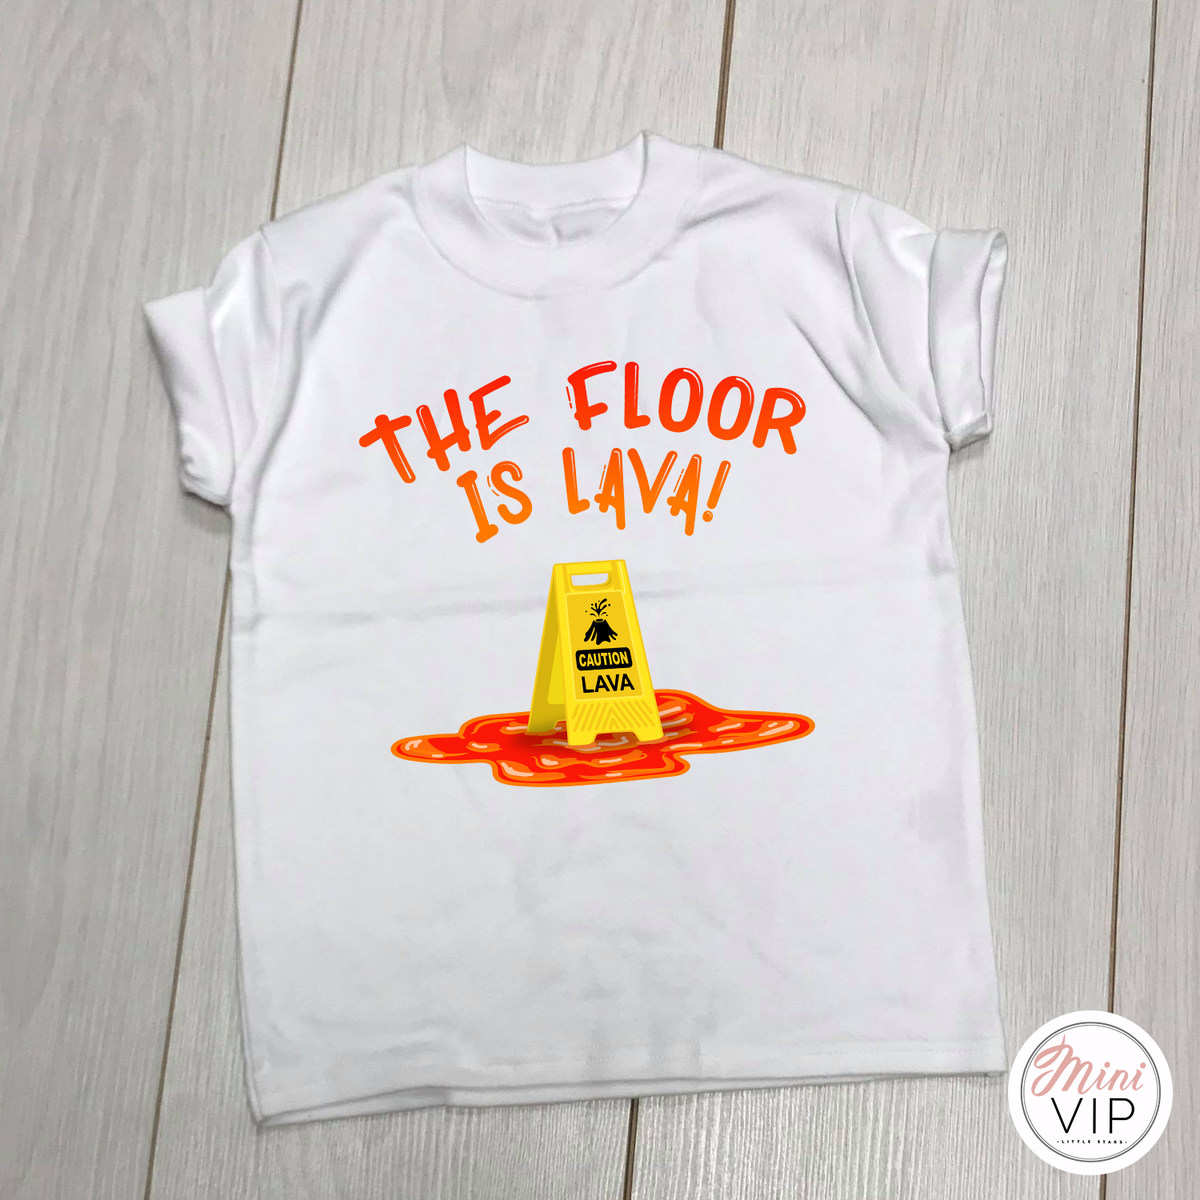 The floor is lava white t-shirt